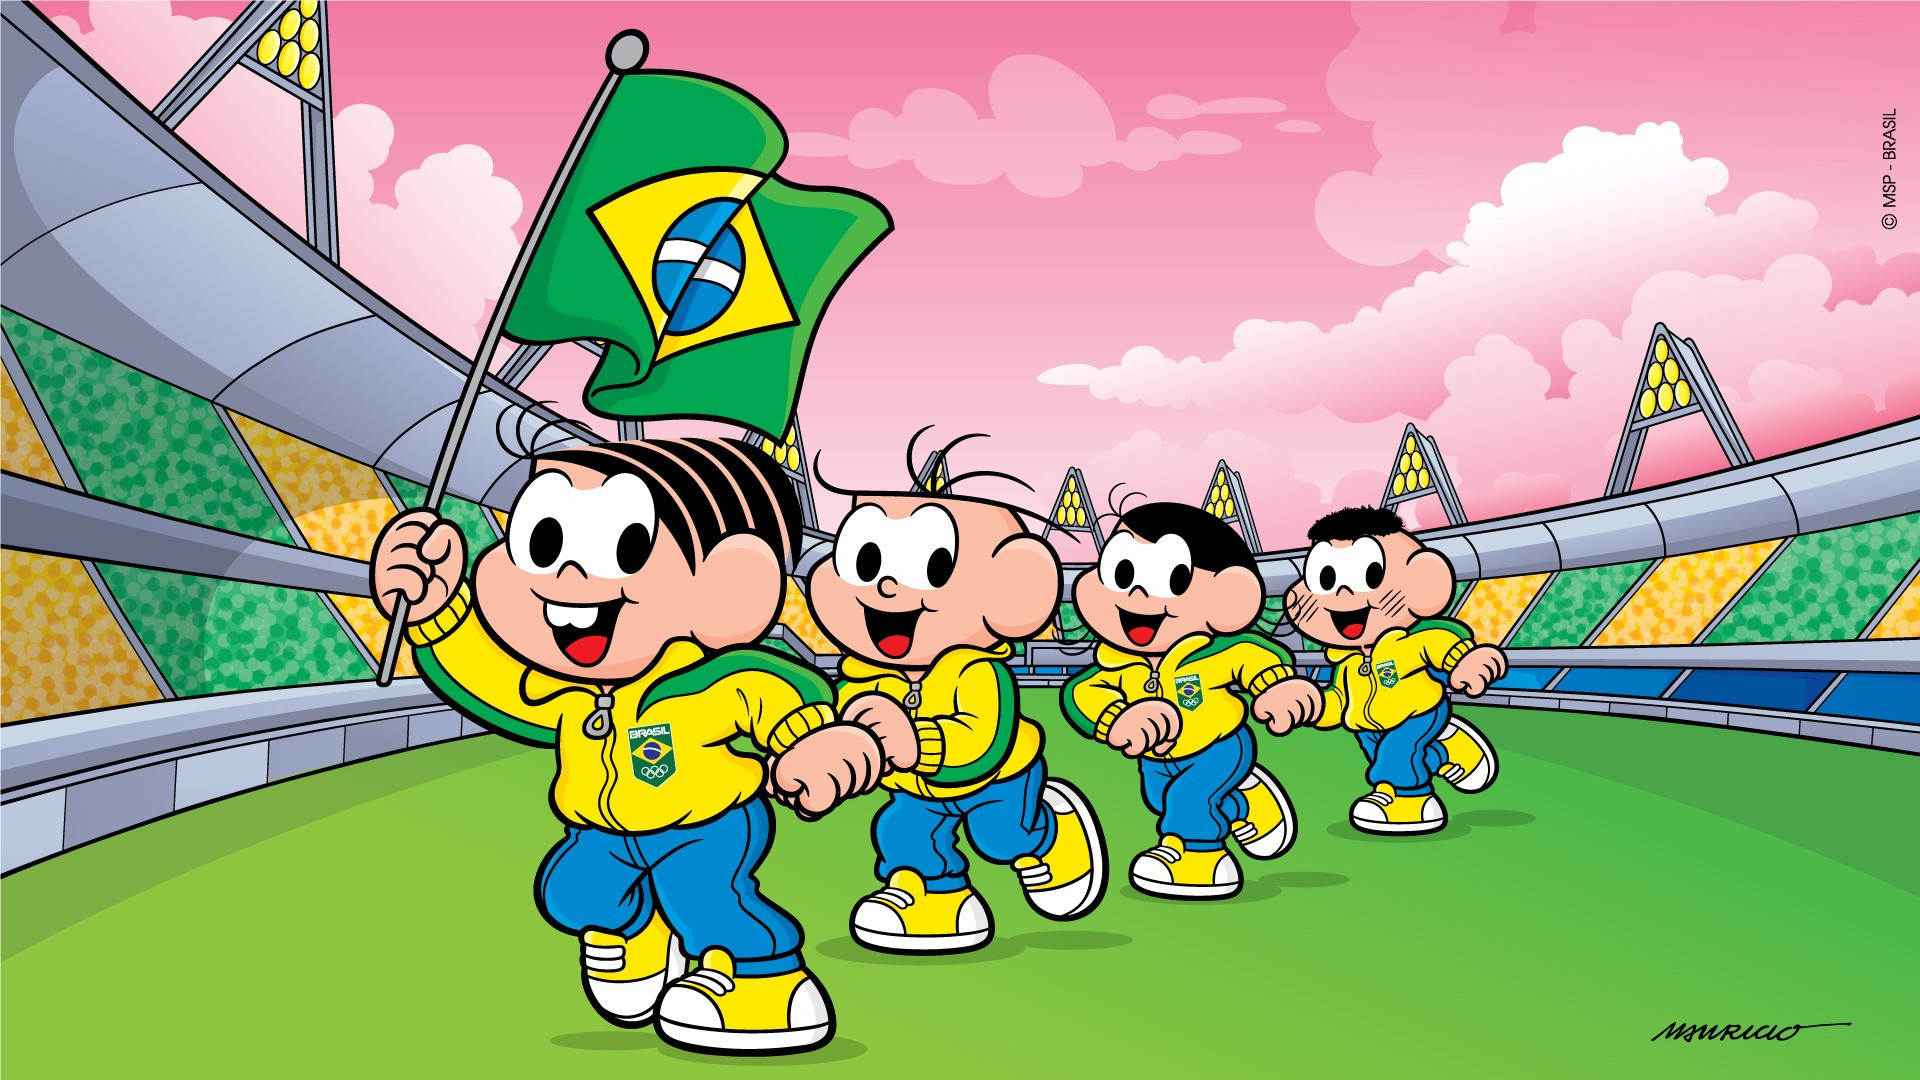 The Brazilian Olympic Committee has announced a Tokyo 2020 partnership with the comic book series Turma da Mônica ©COB/Mauricio de Sousa